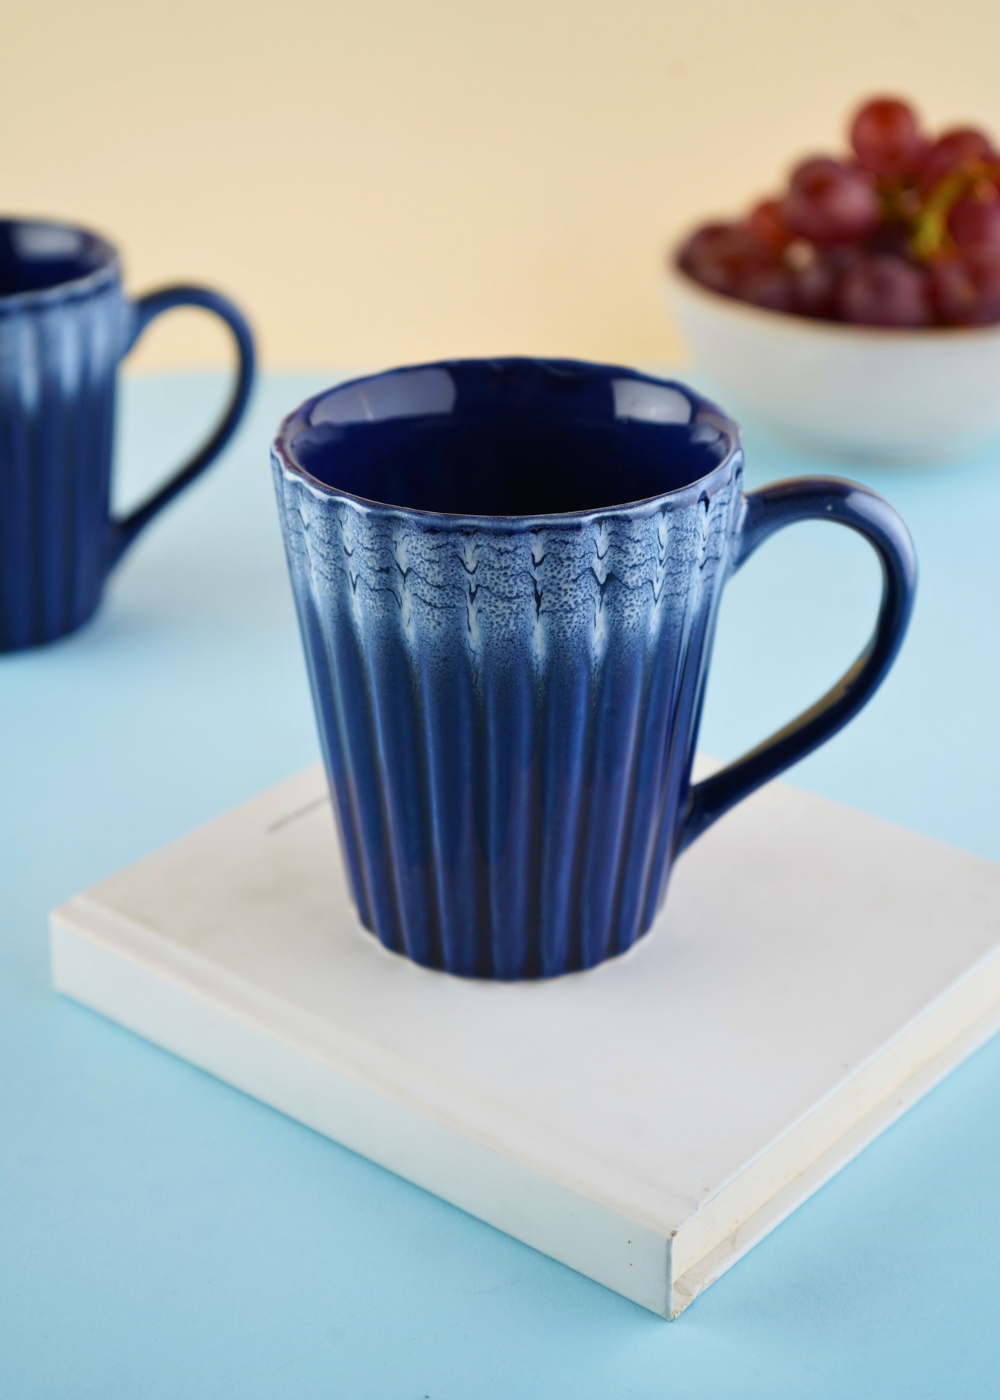 Handmade basic Blue coffee mug with shade of blue color